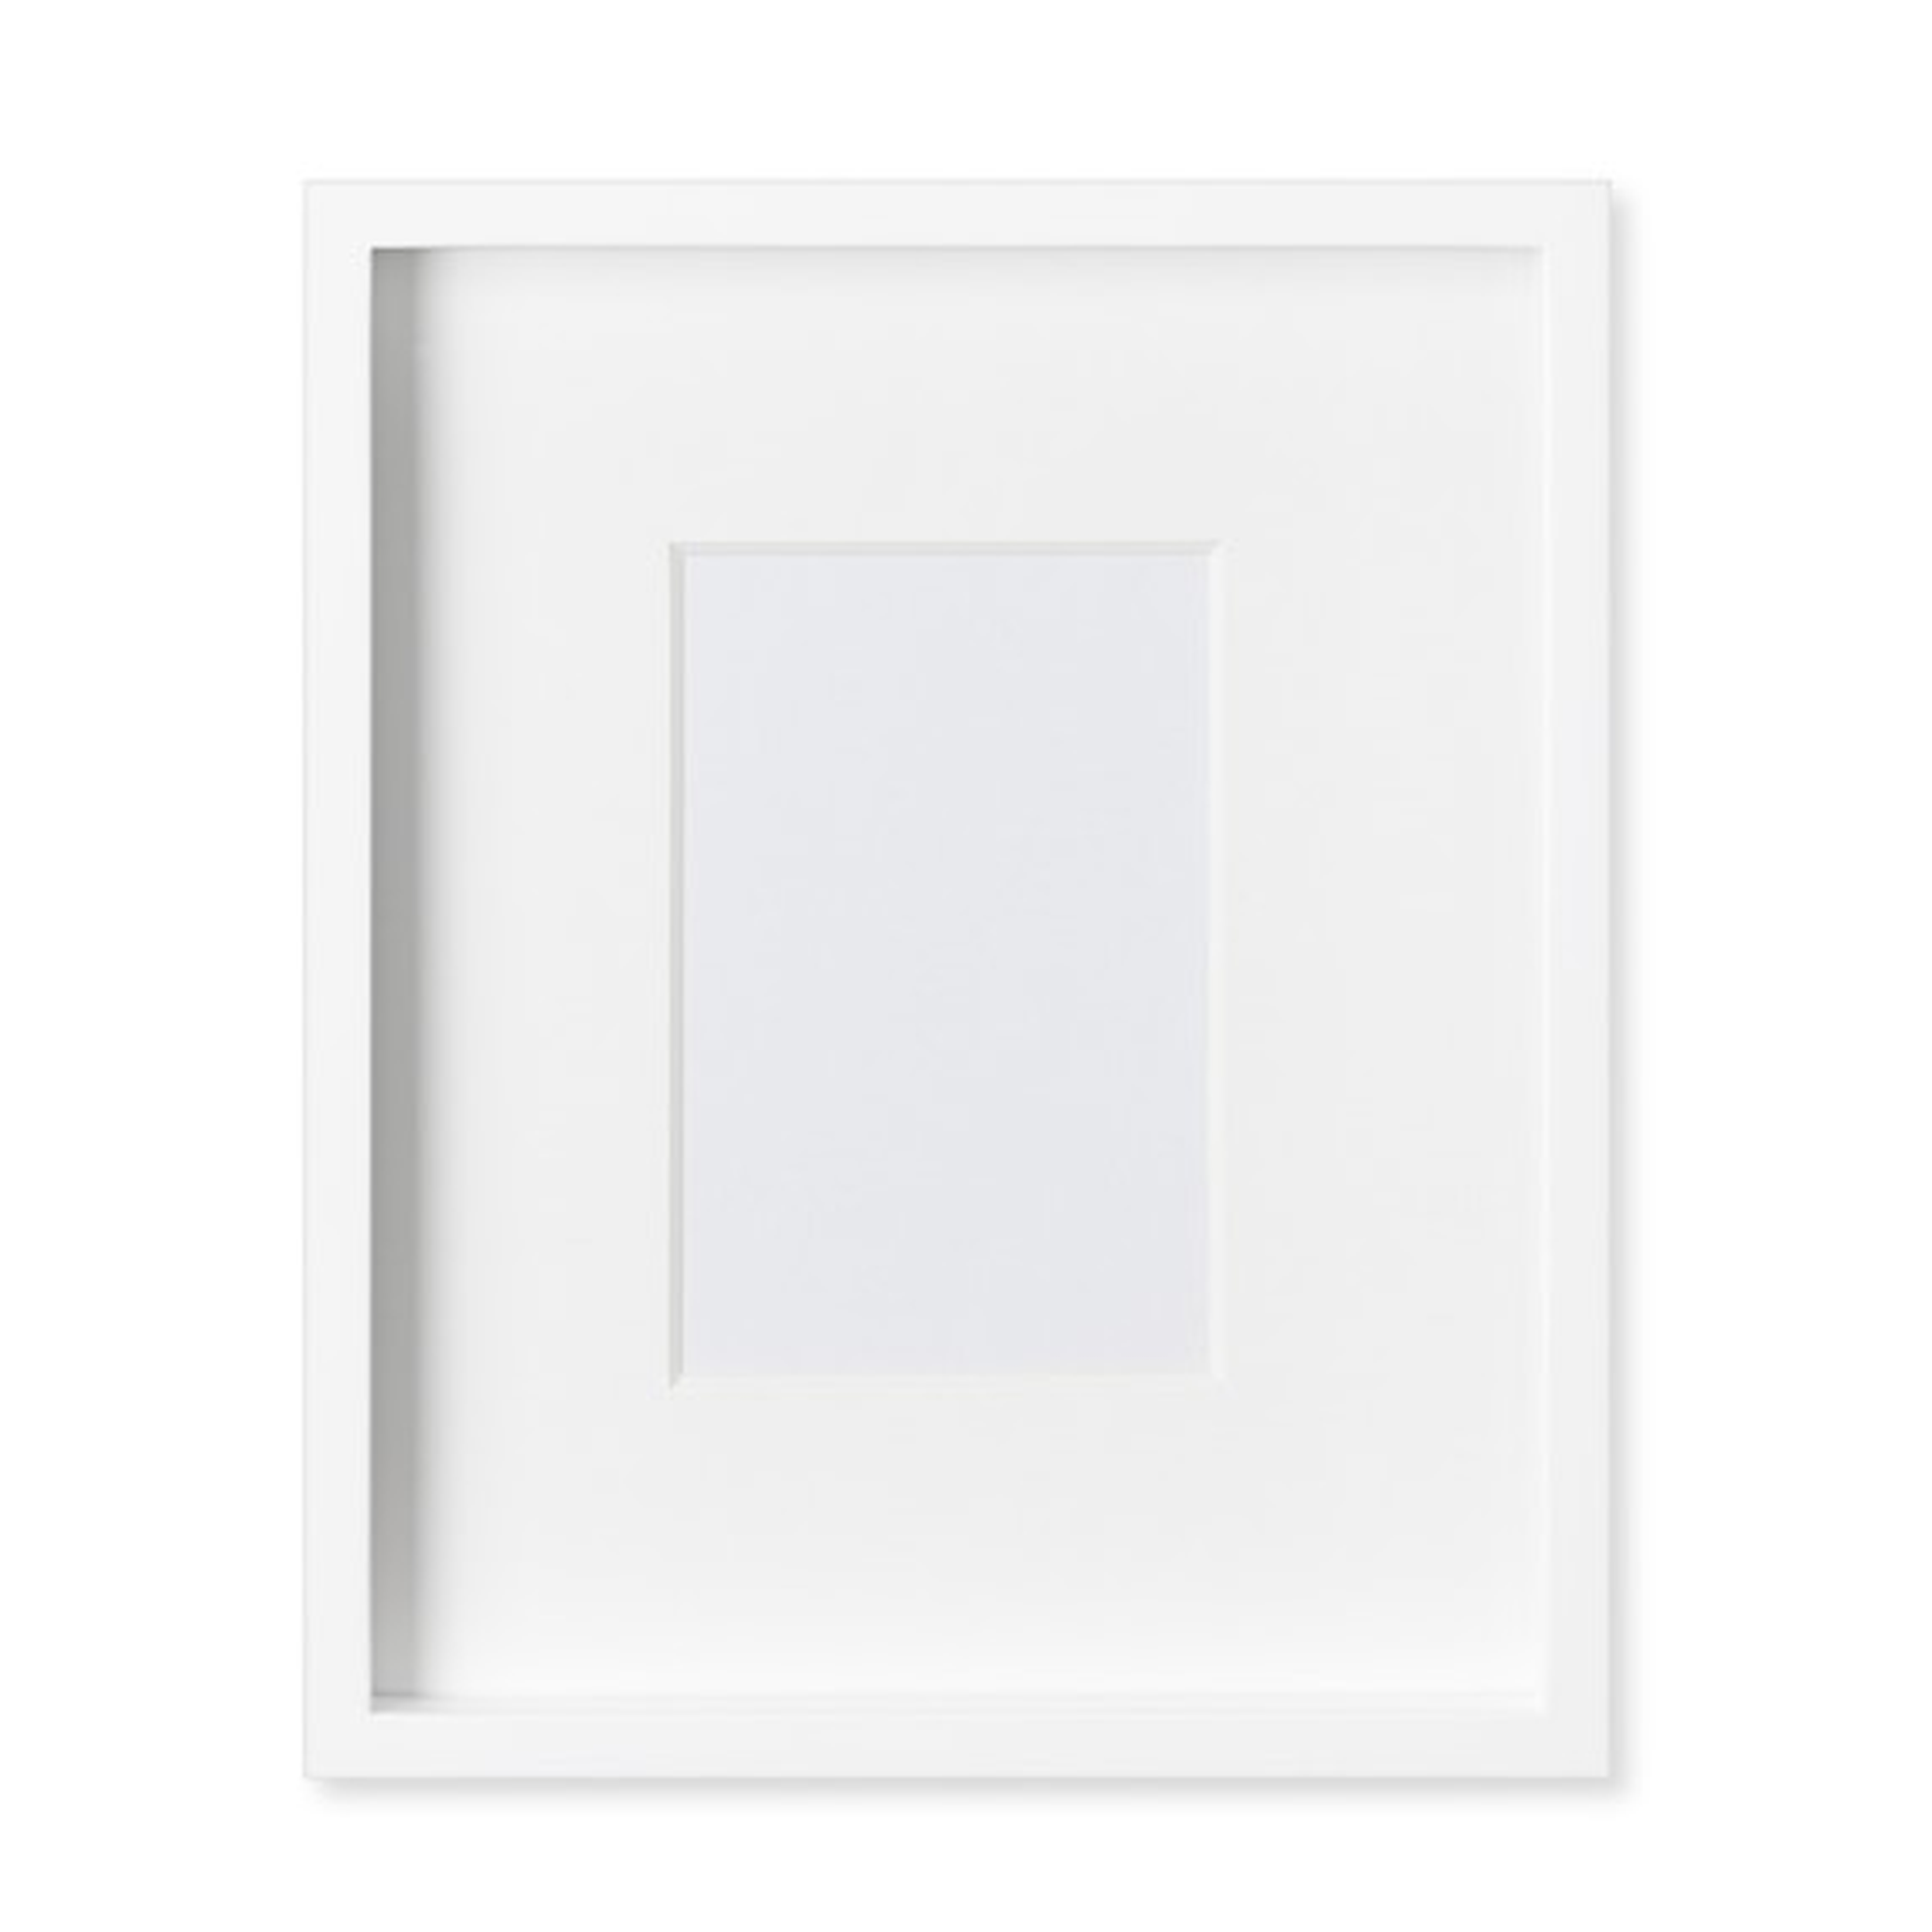 White Lacquer Gallery Picture Frame - 11" X 14" - Williams Sonoma Home